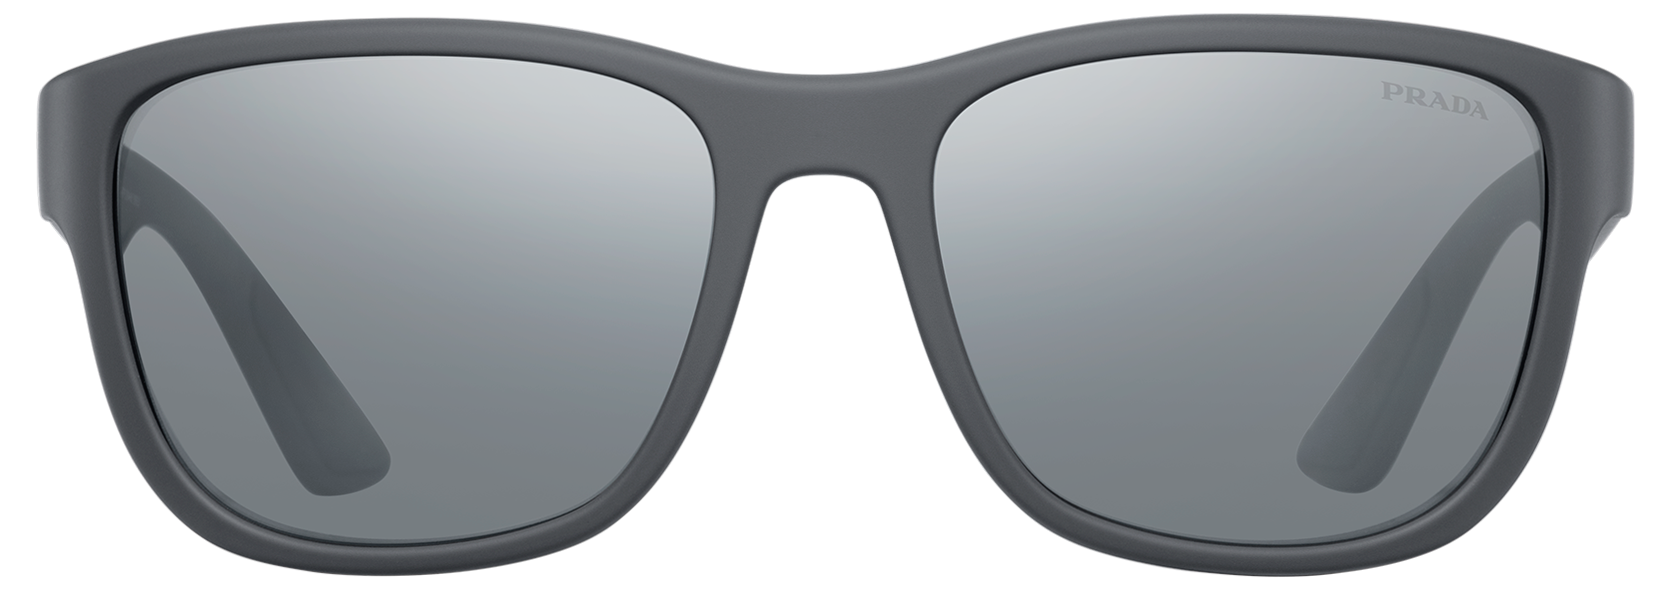 Prada Sunglasses PNG Background Image